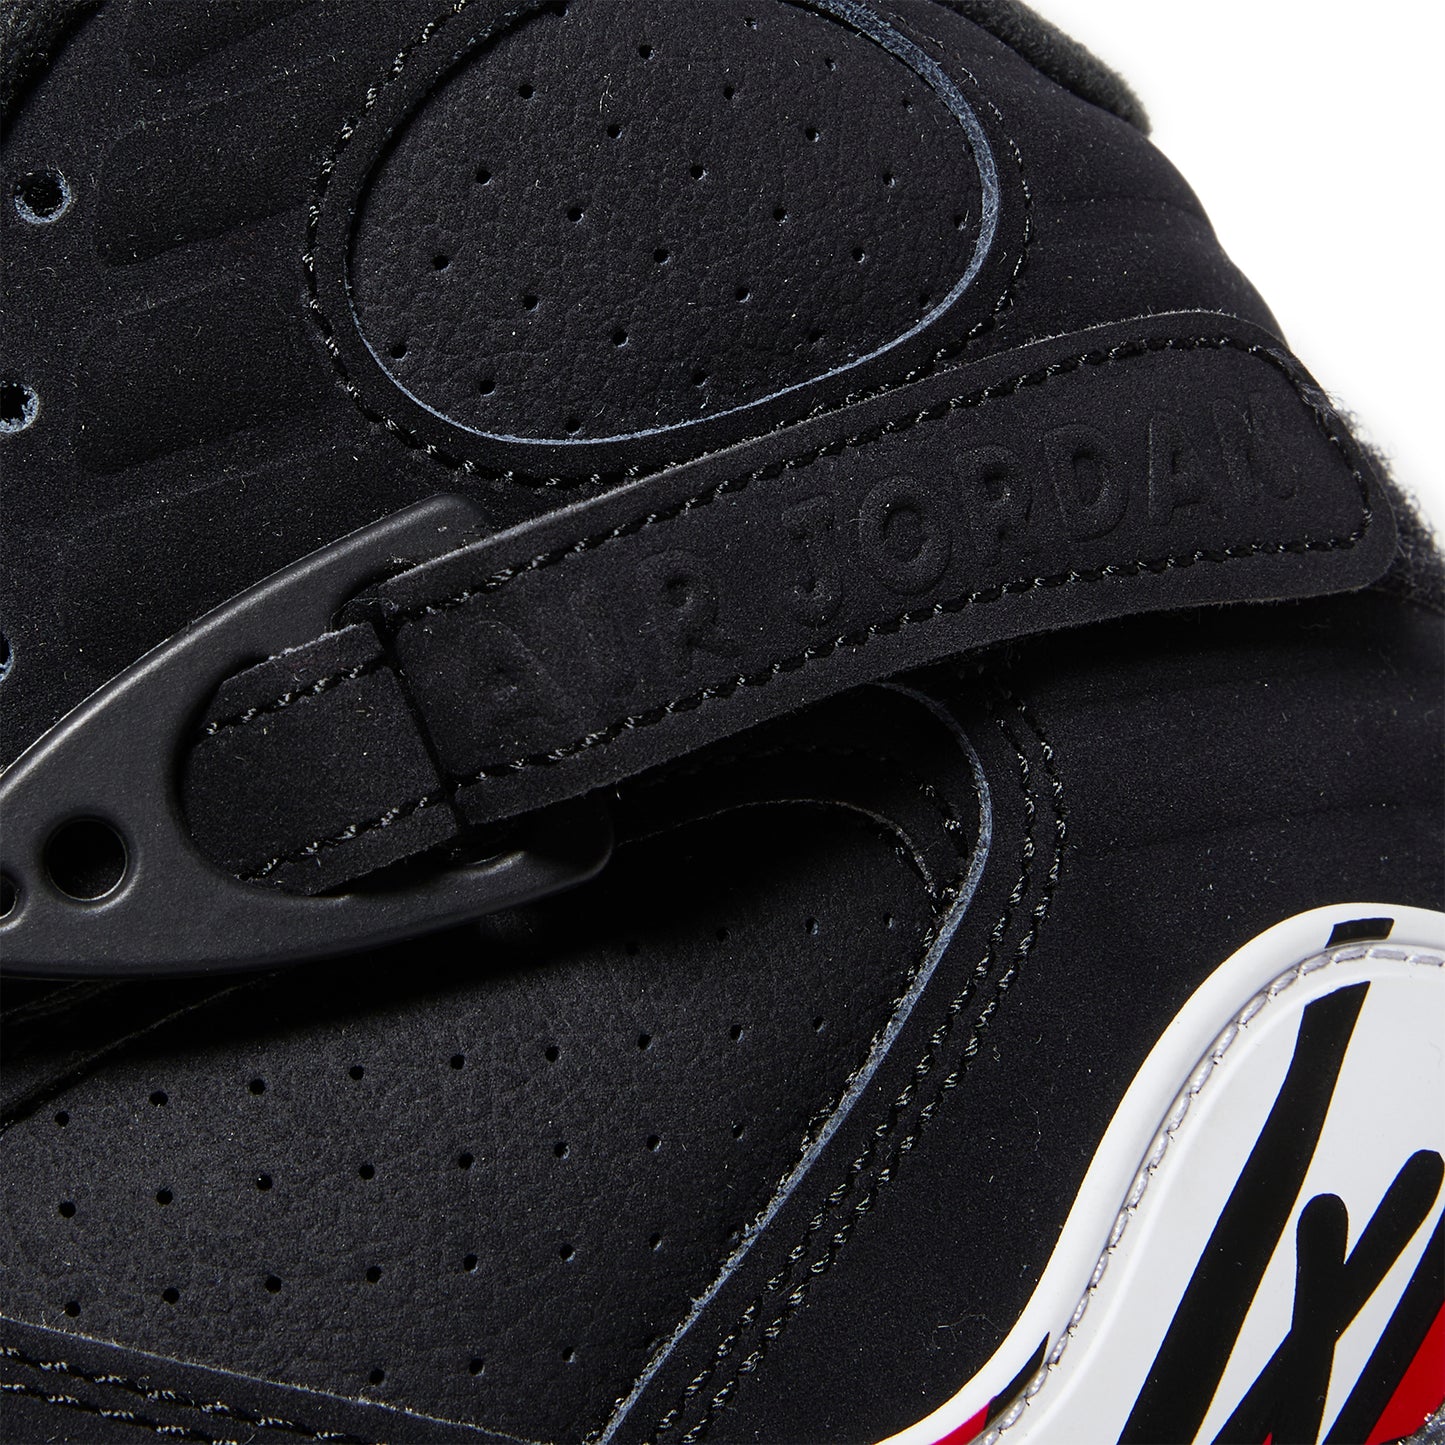 Nike Kids Air Jordan 8 Retro (Black/True Red/White)